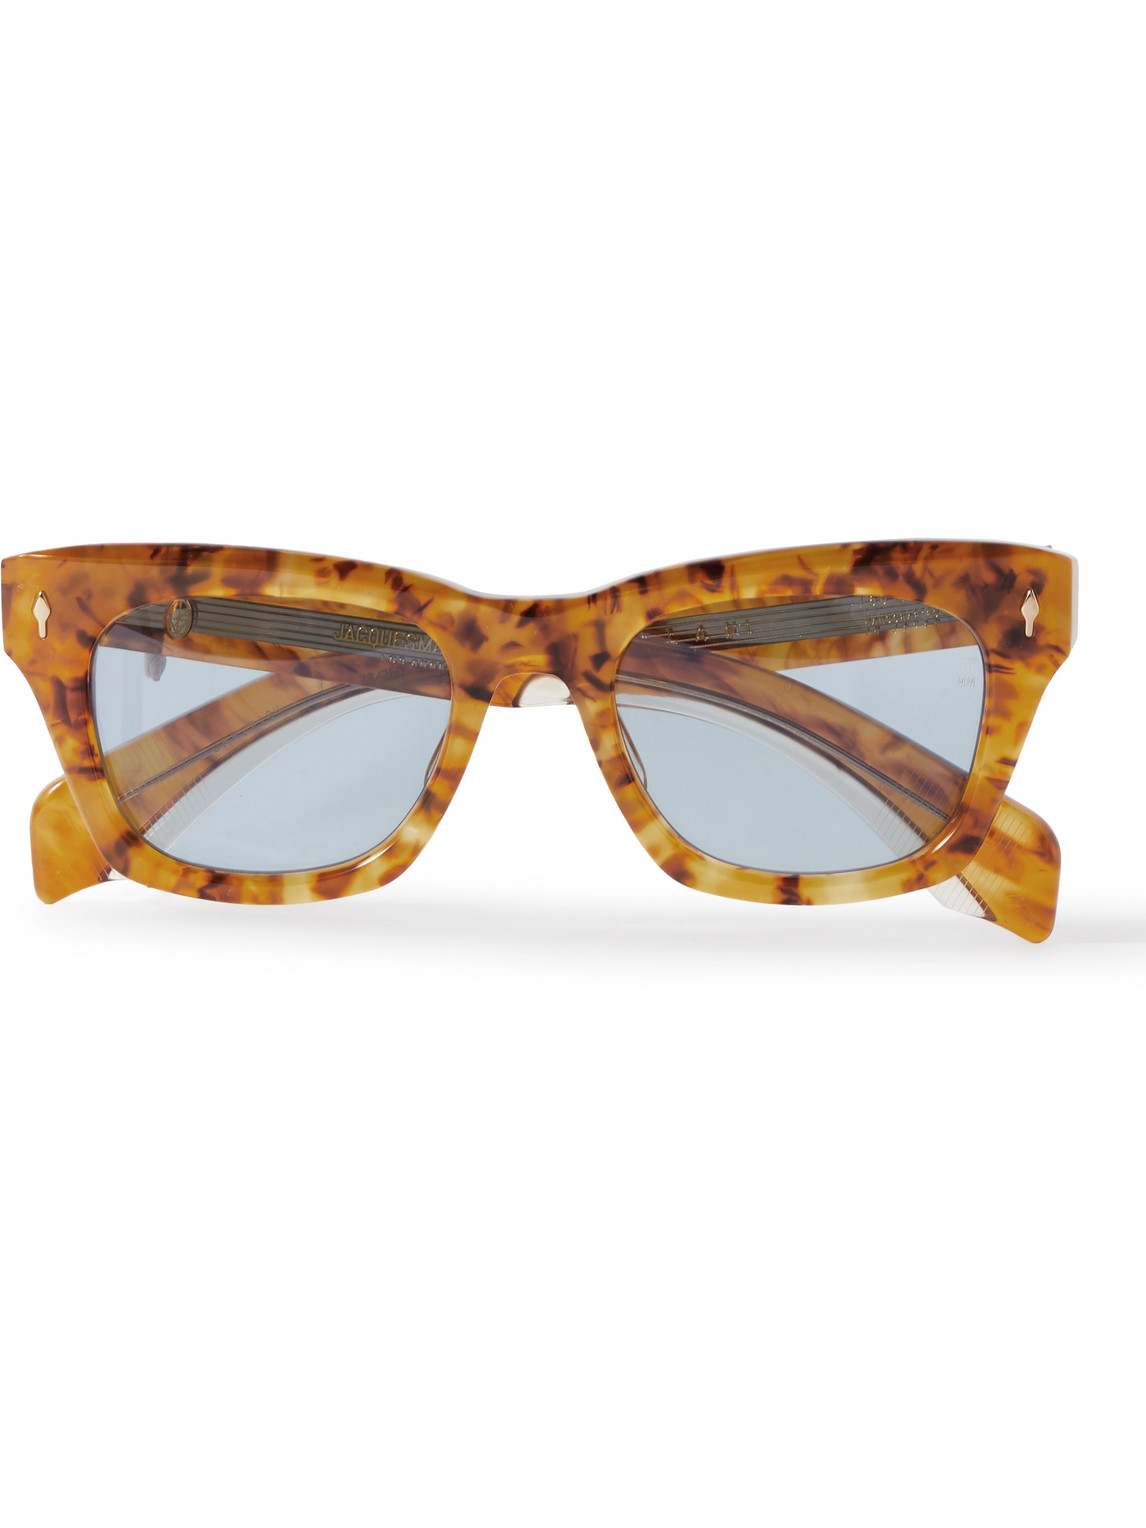 Jacques Marie Mage Dealan Vintage Square-frame Tortoiseshell Acetate Sunglasses